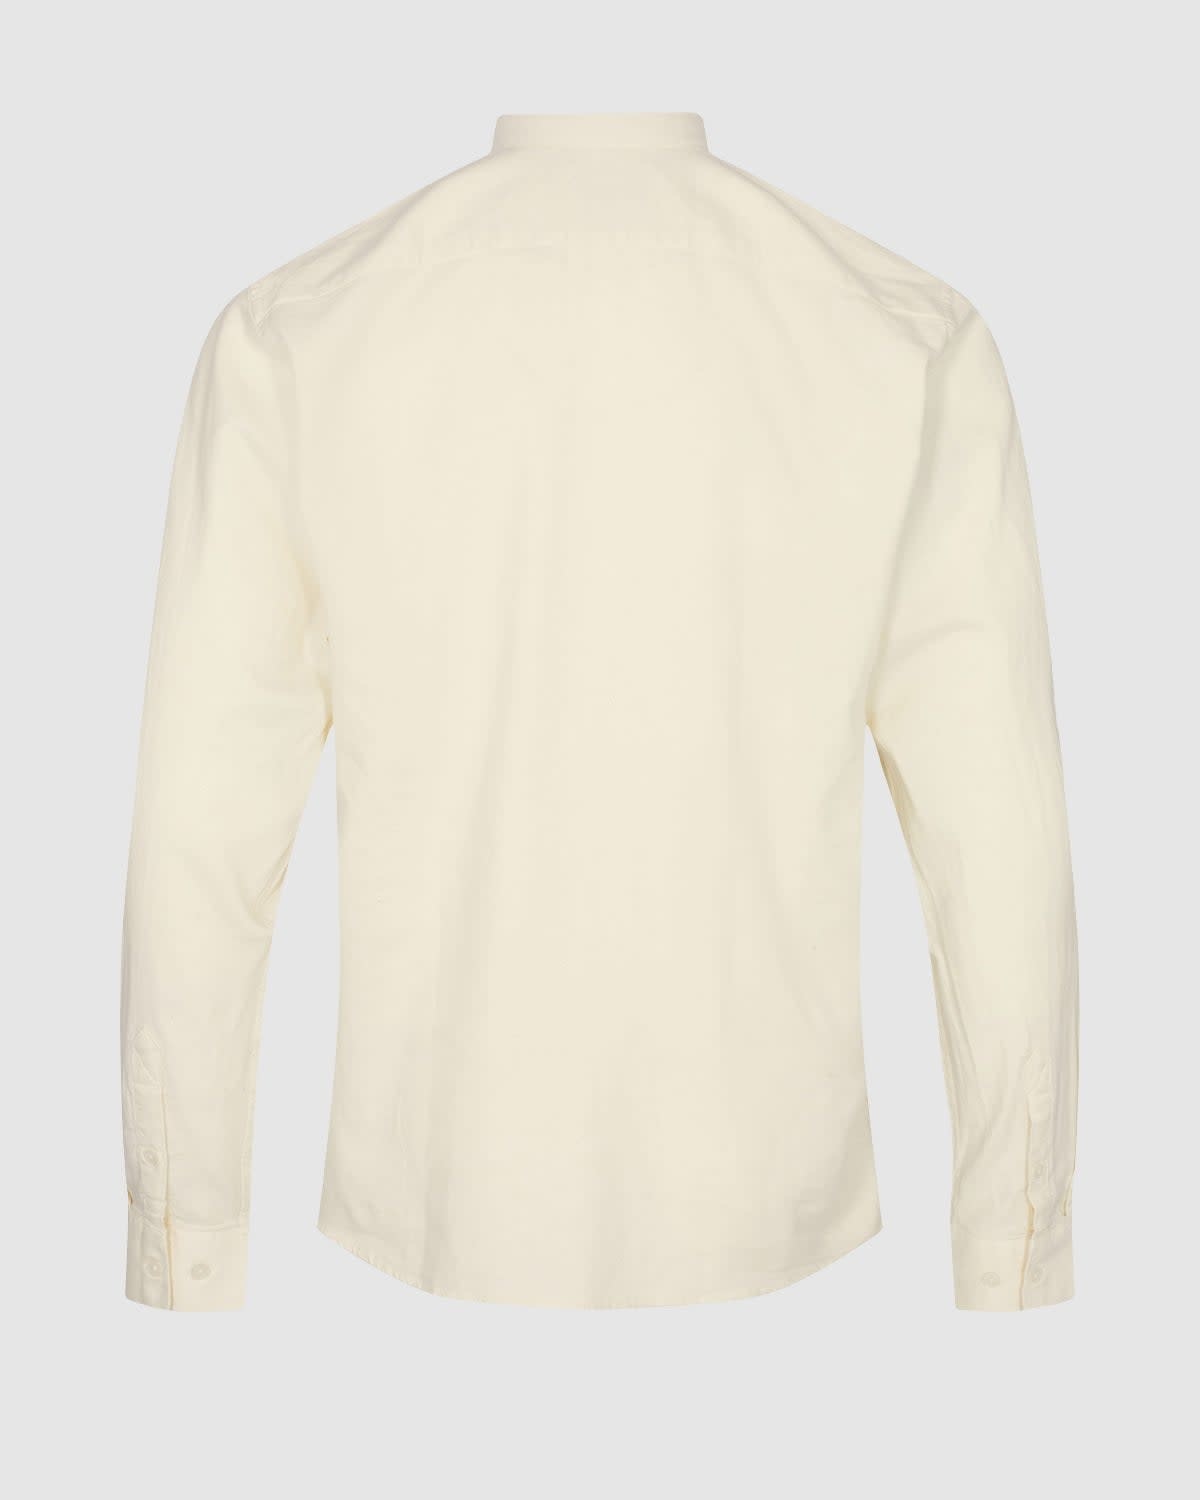 Minimum Minimum Anholt 0063 Shirt Broken White Melange